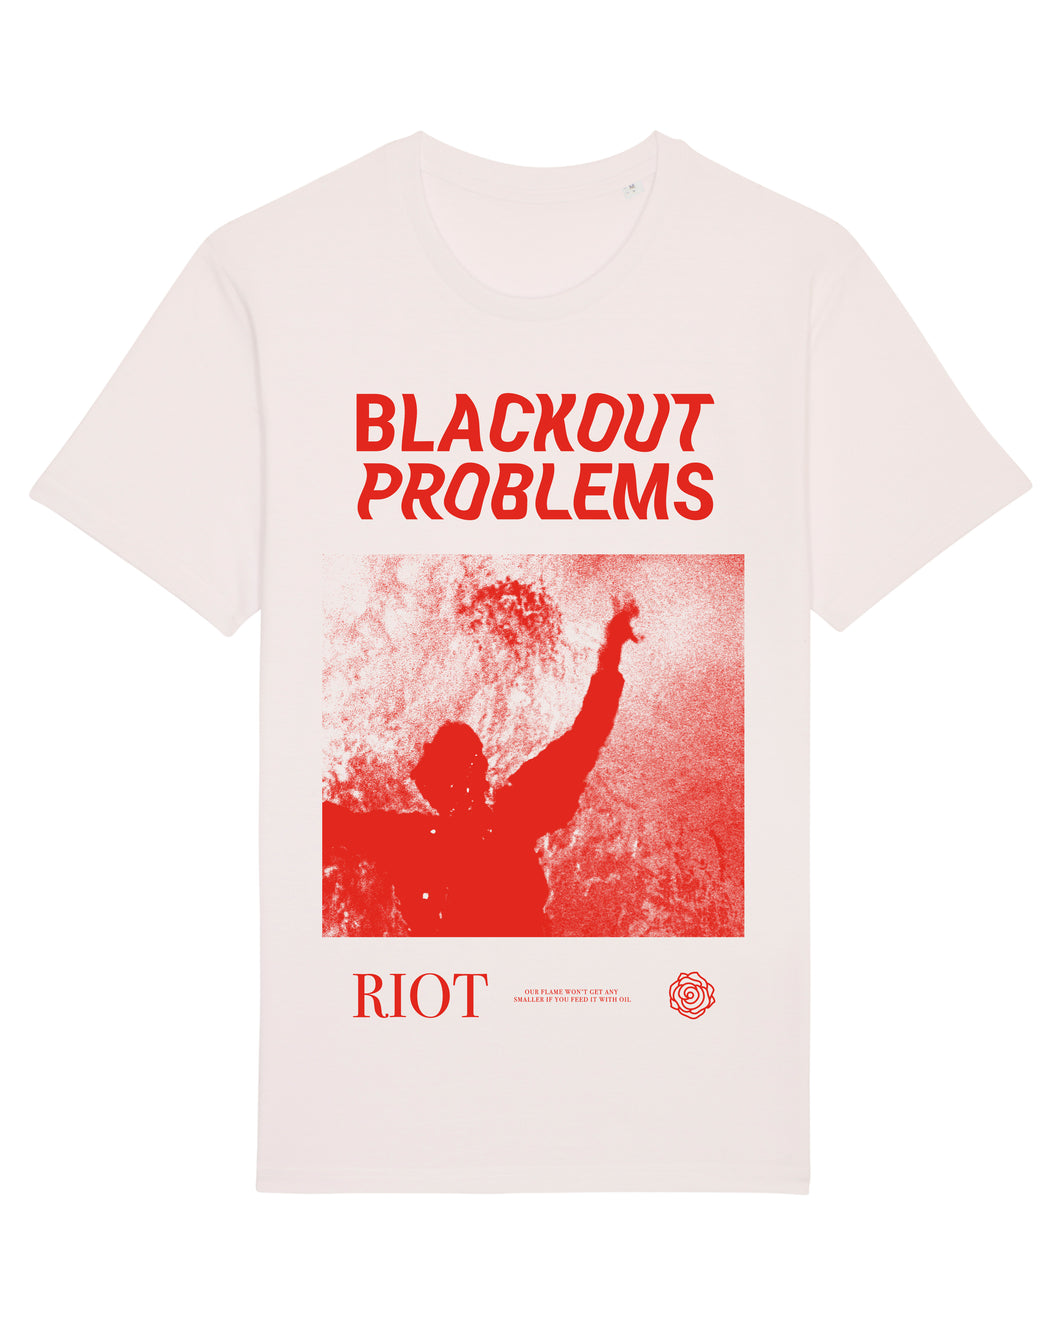 BLACKOUT PROBLEMS - RIOT T-SHIRT - WHITE